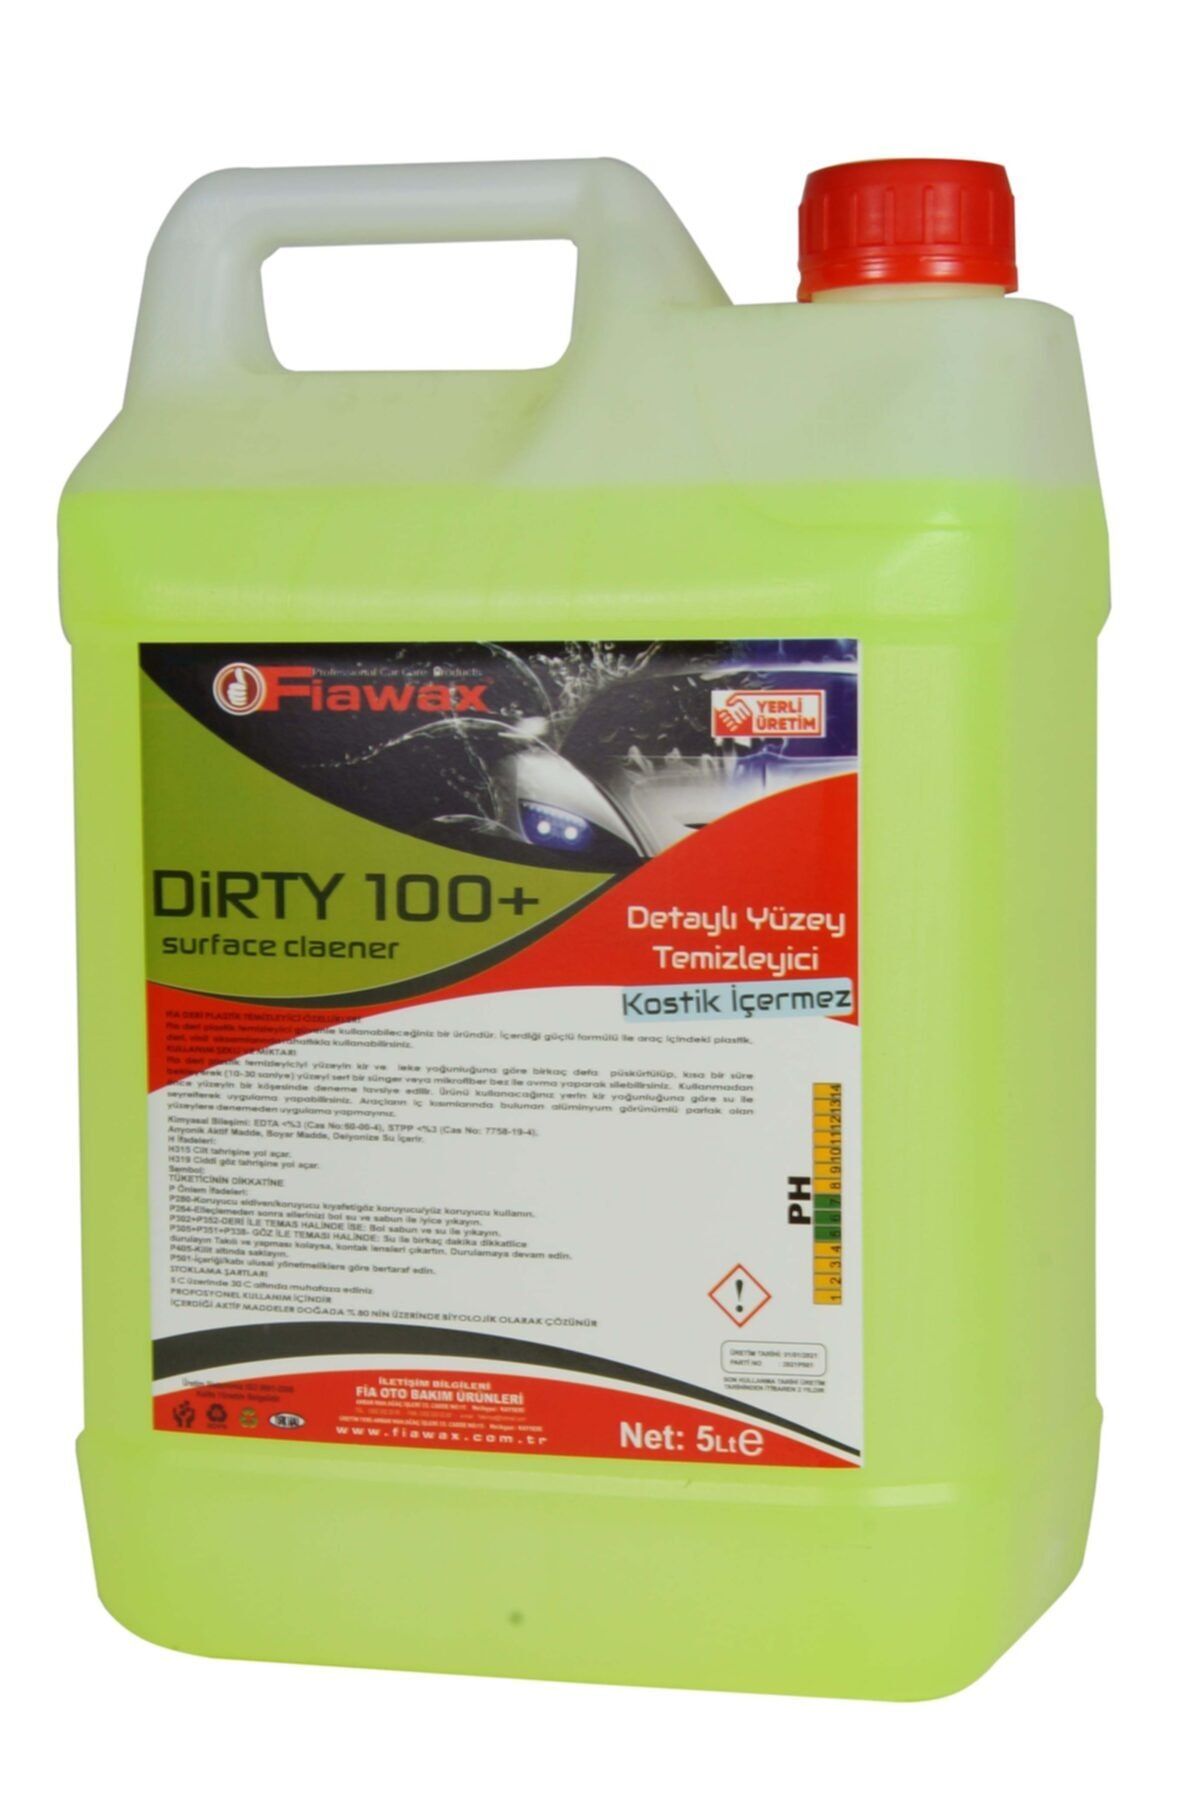 Fiawax Dirty 100+ Detaylı Yüzey Temizleyici 5lt